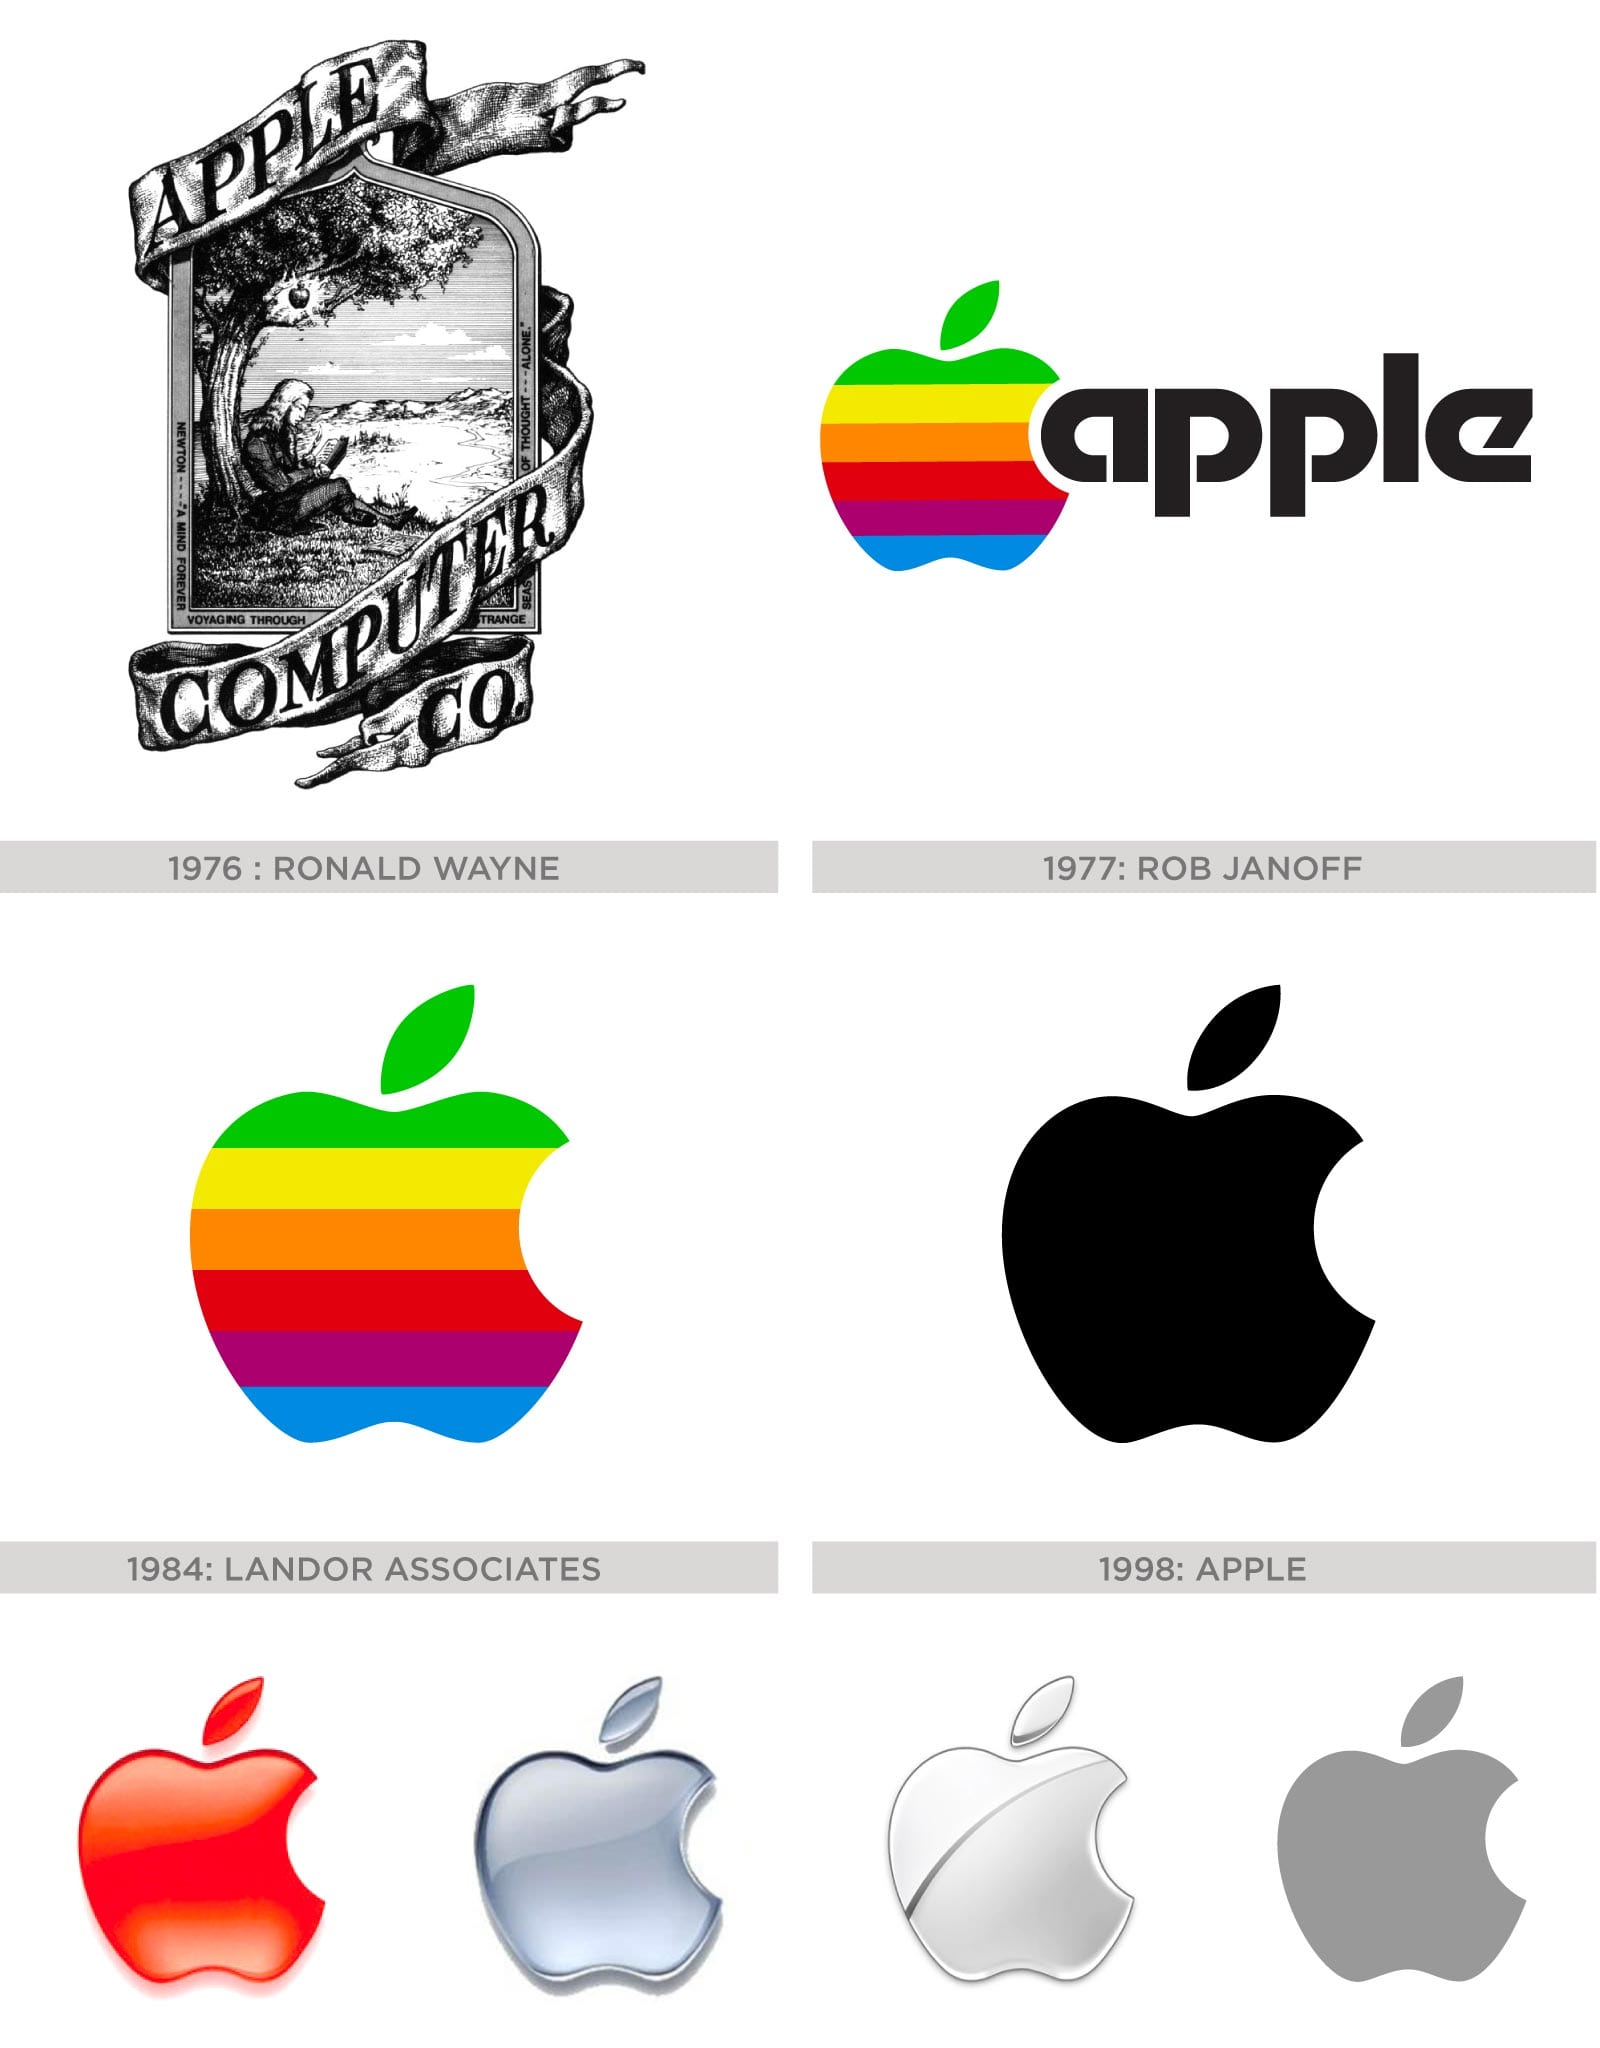 When the MacBook Apple logo was upside down